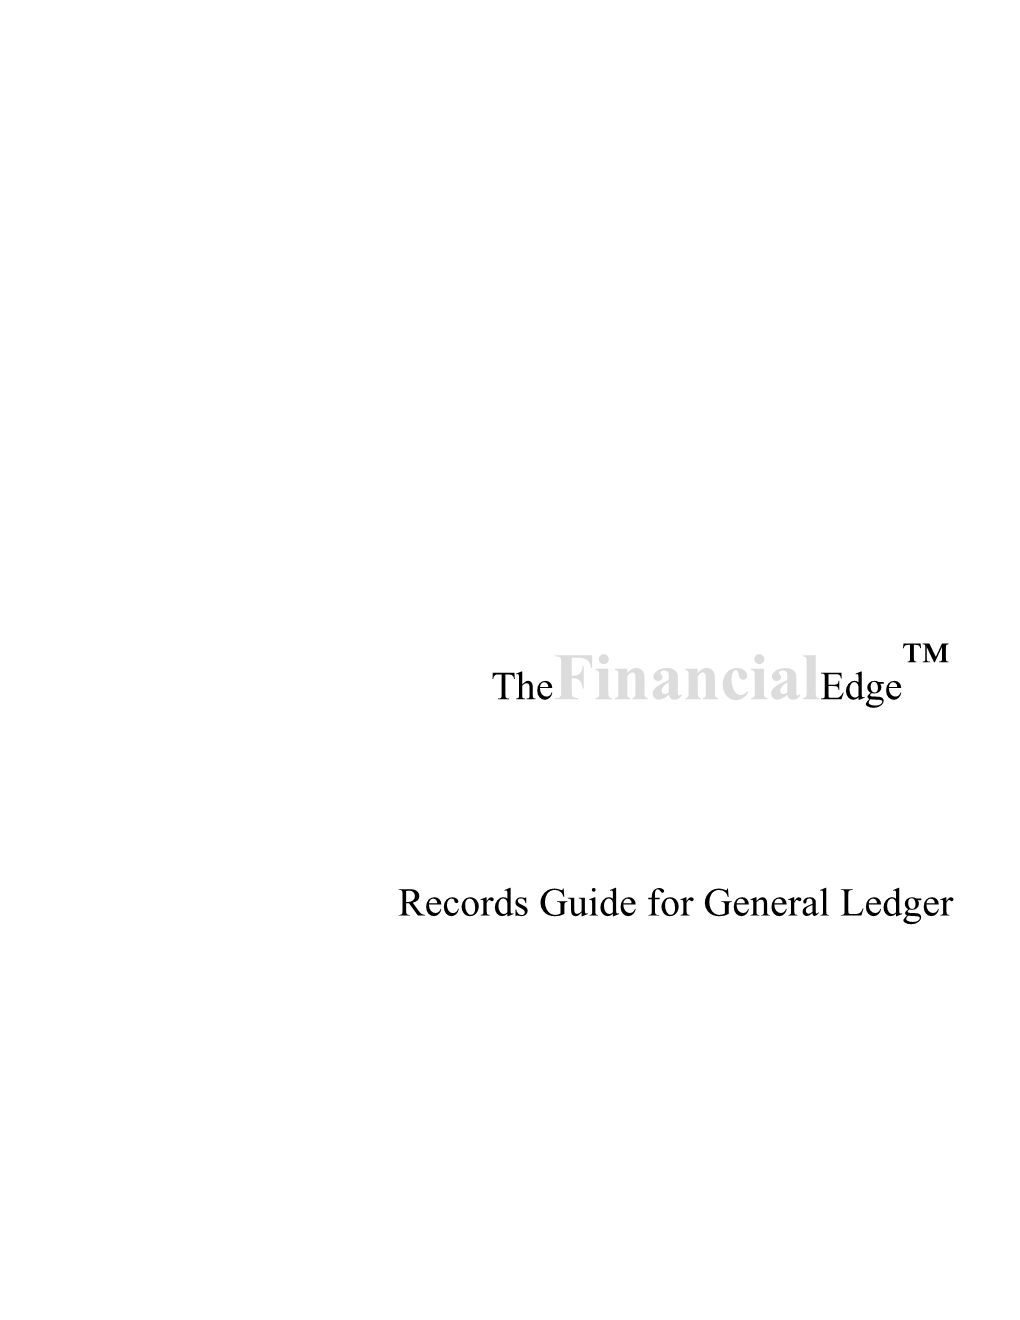 General Ledger Records Guide